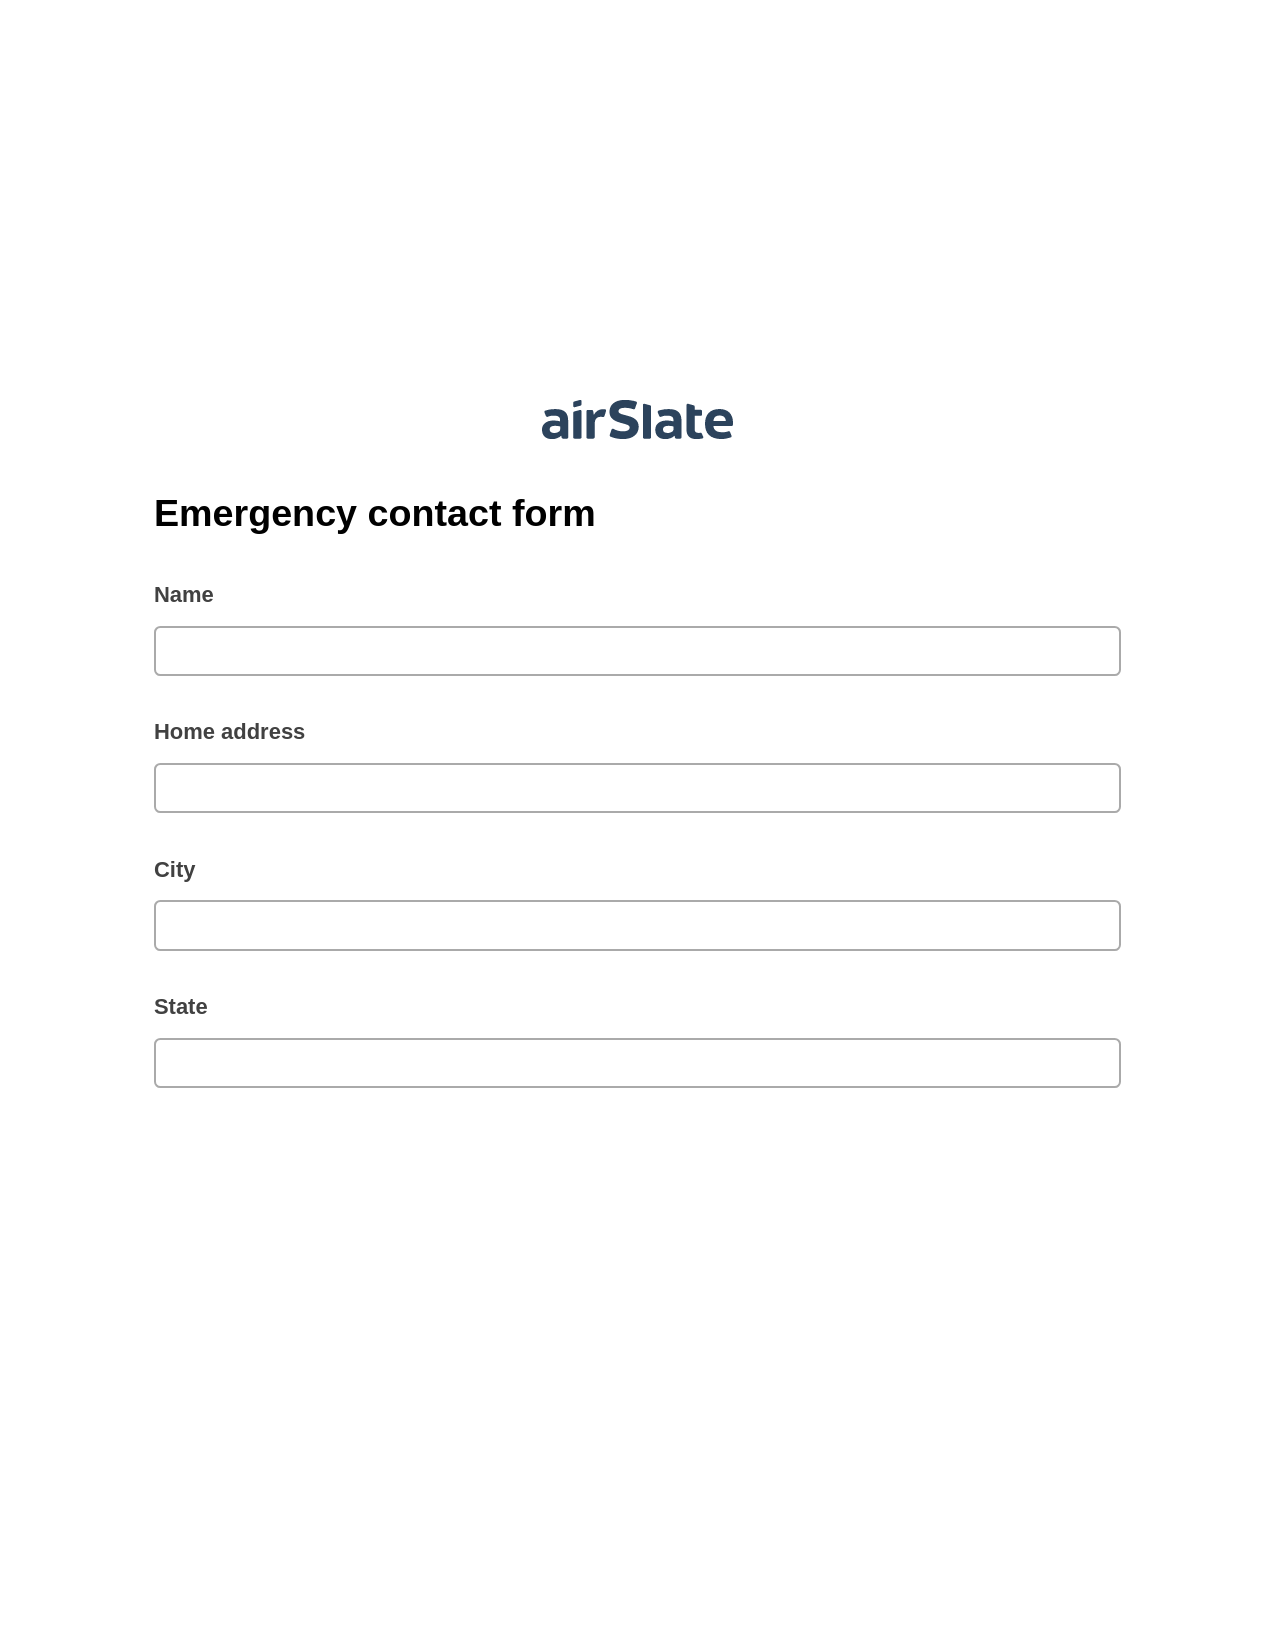 Multirole Emergency contact form Pre-fill from Google Sheet Dropdown Options Bot, Google Calendar Bot, Webhook Postfinish Bot